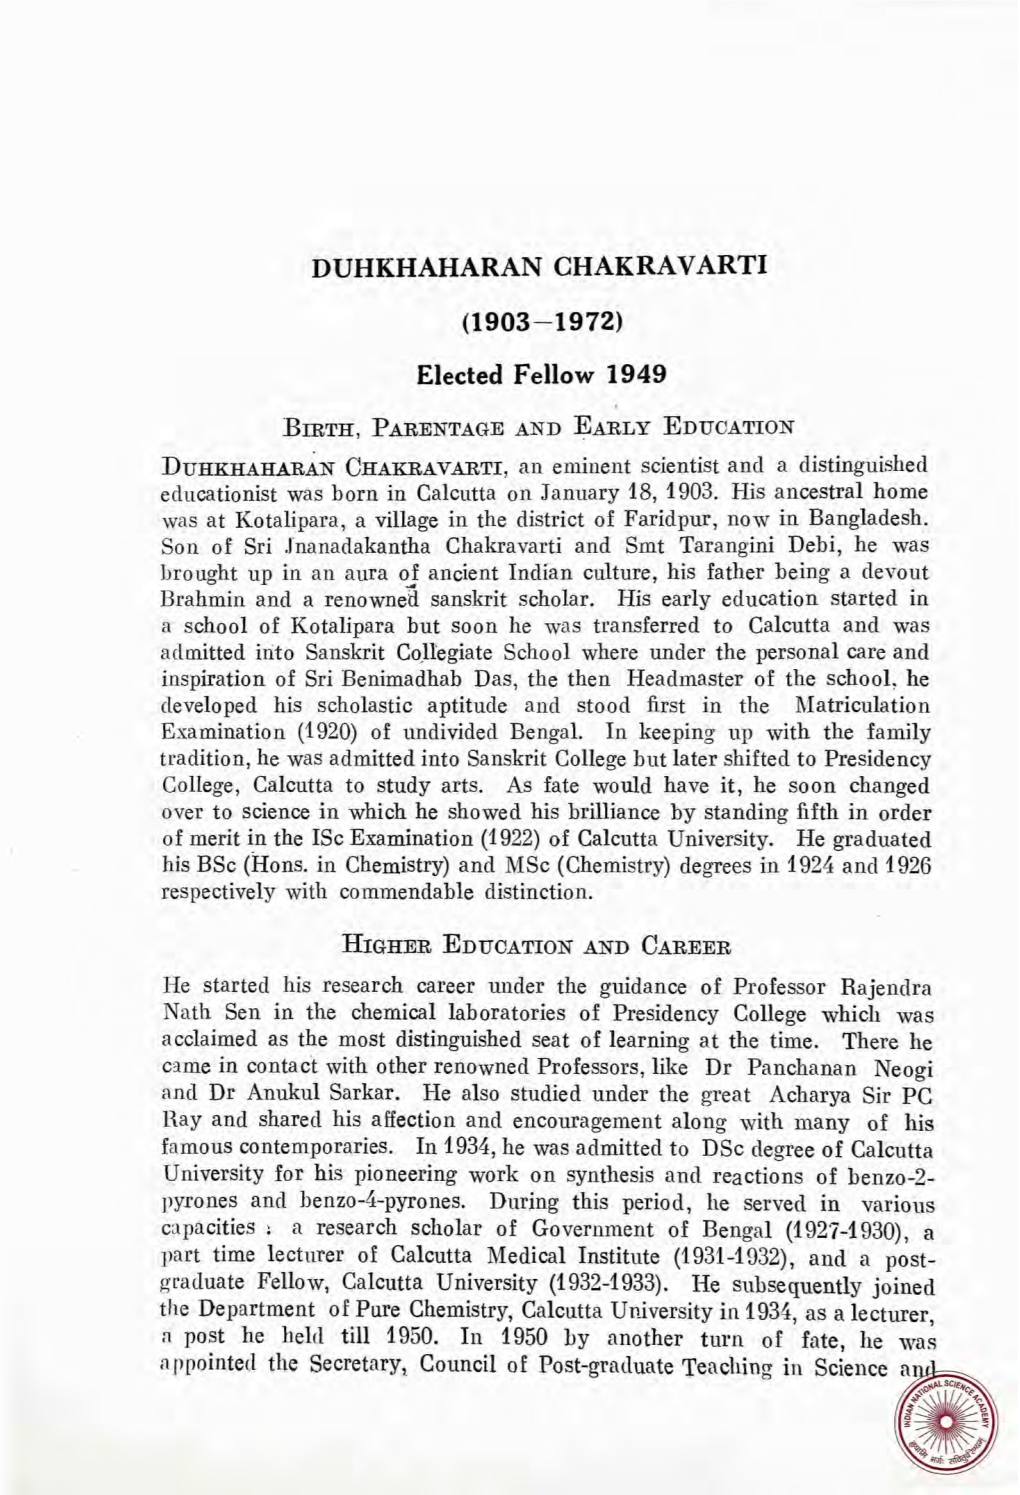 Duhkhaharanchakravarti